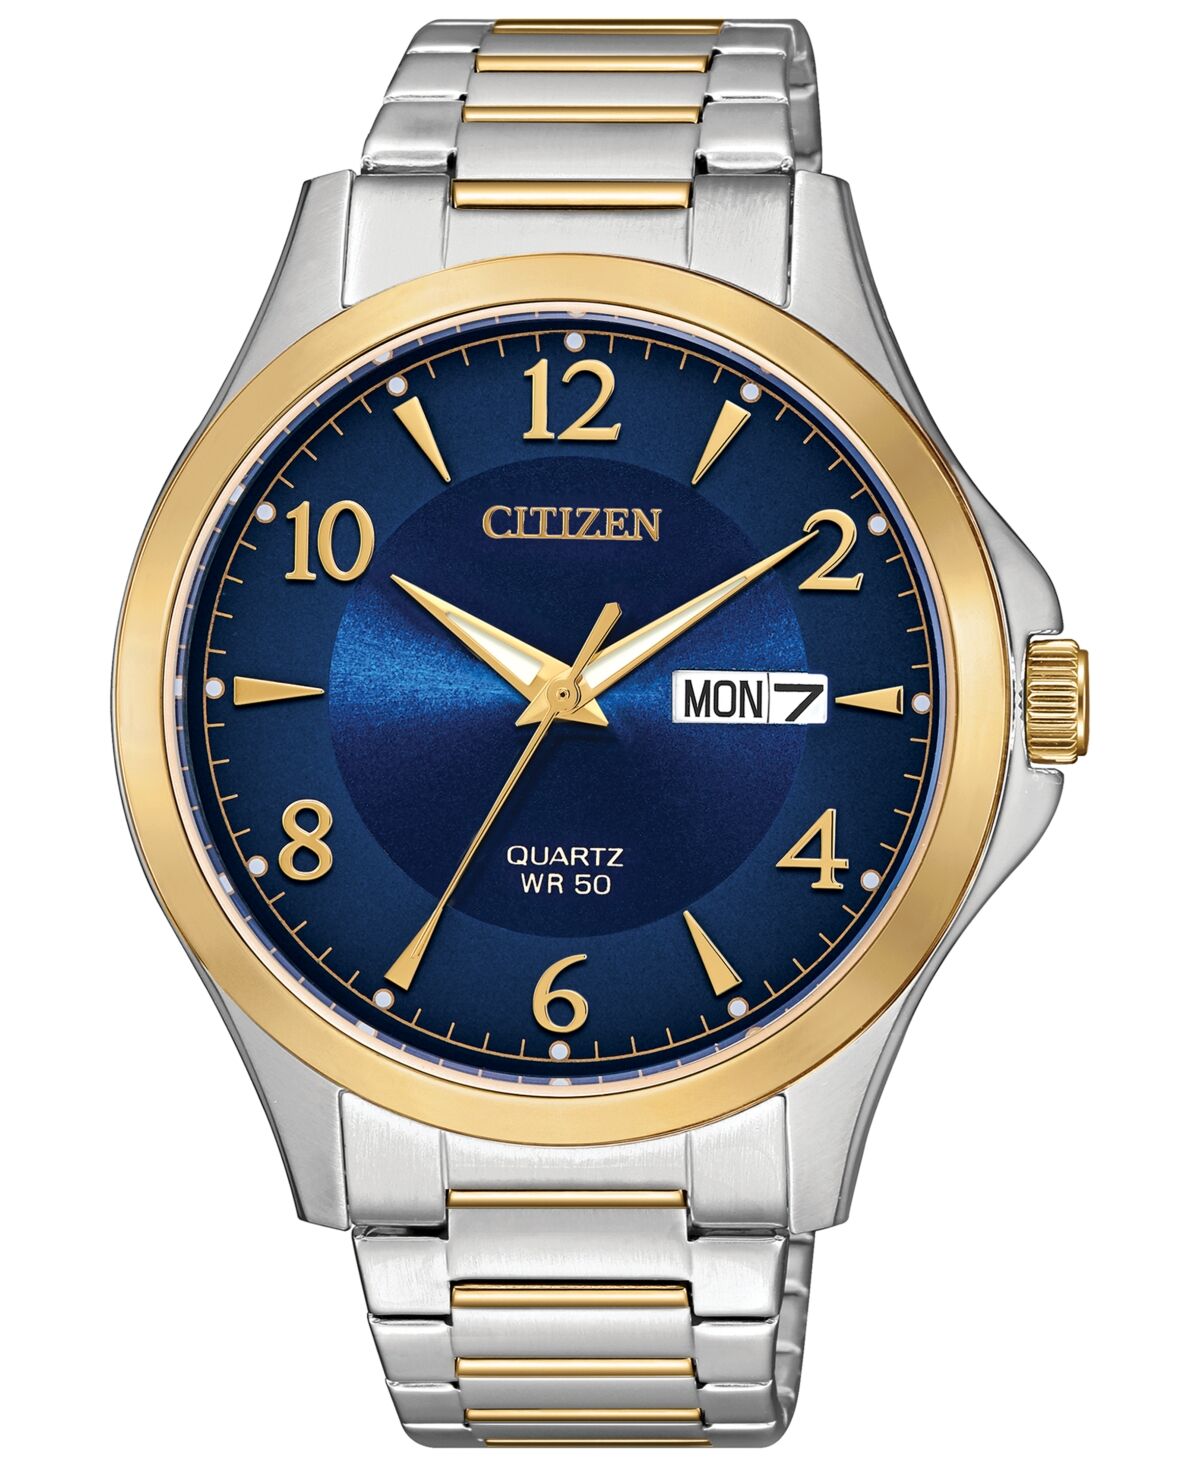 Citizen Men's Quartz Two-Tone Stainless Steel Bracelet Watch 41mm - Two-Tone